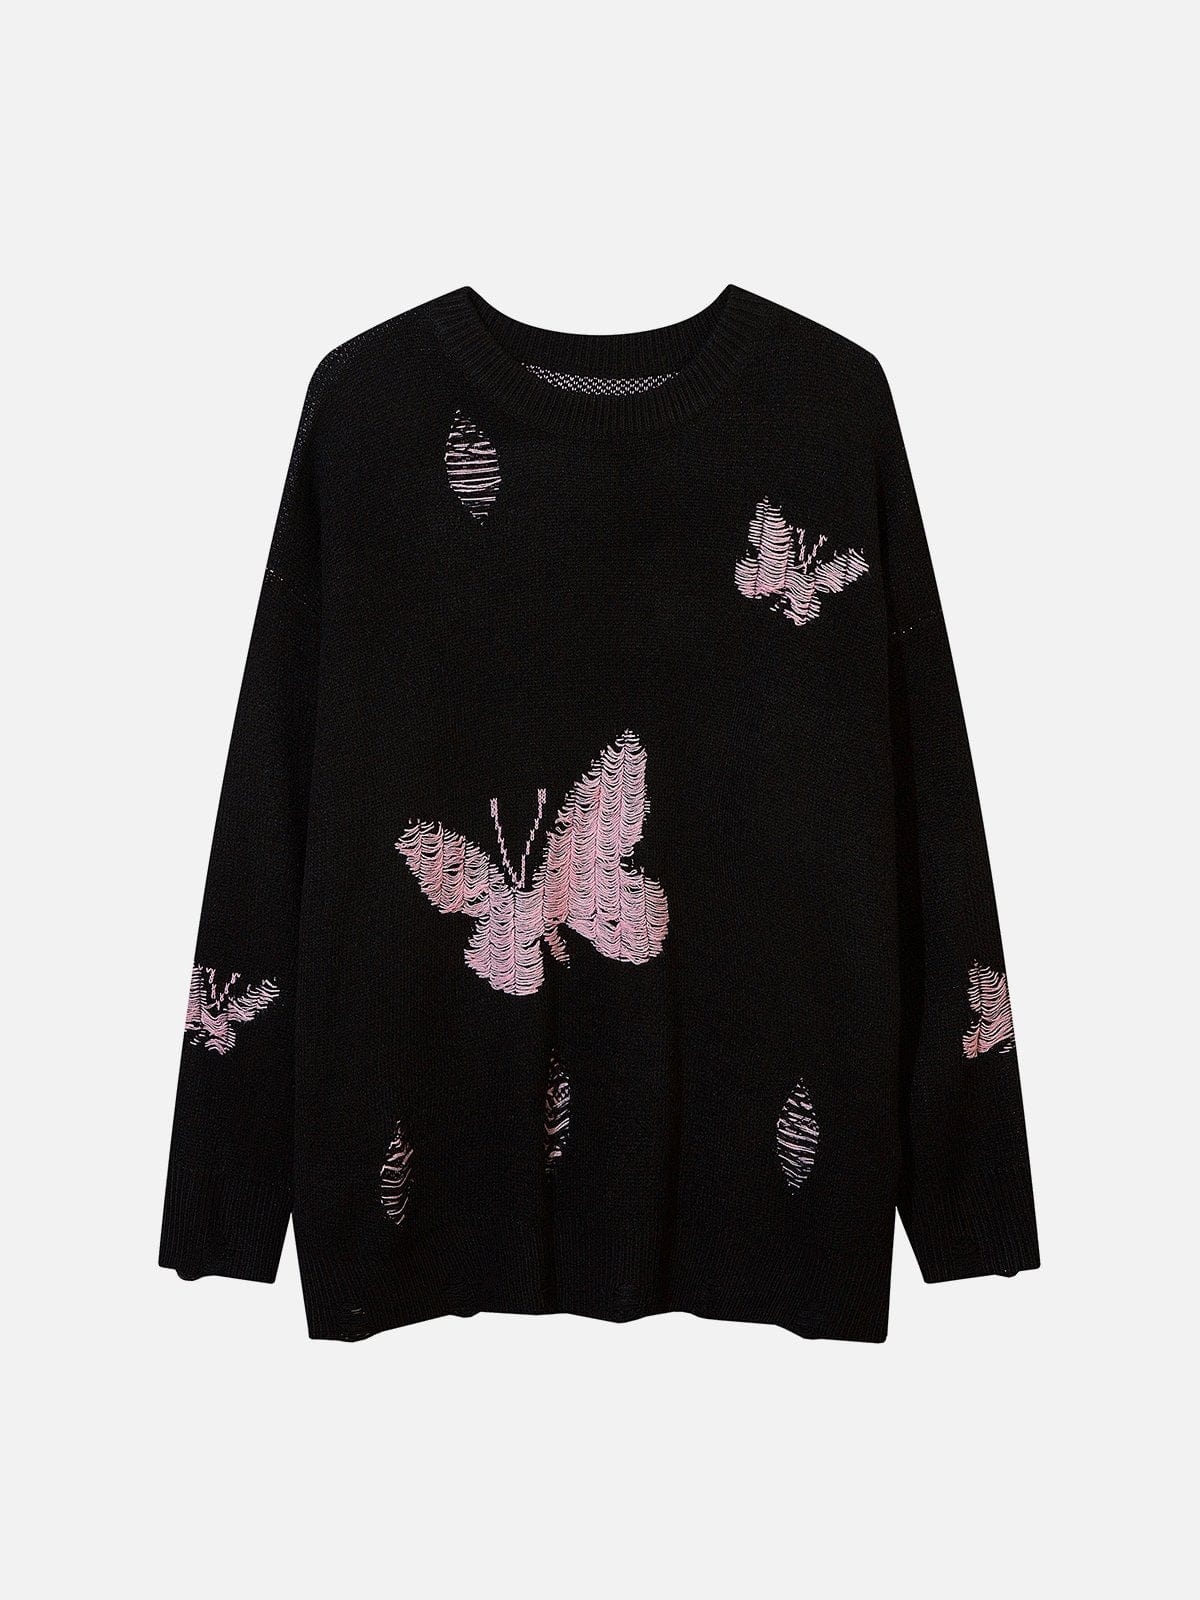 NEV Butterfly Jacquard Holes Sweater